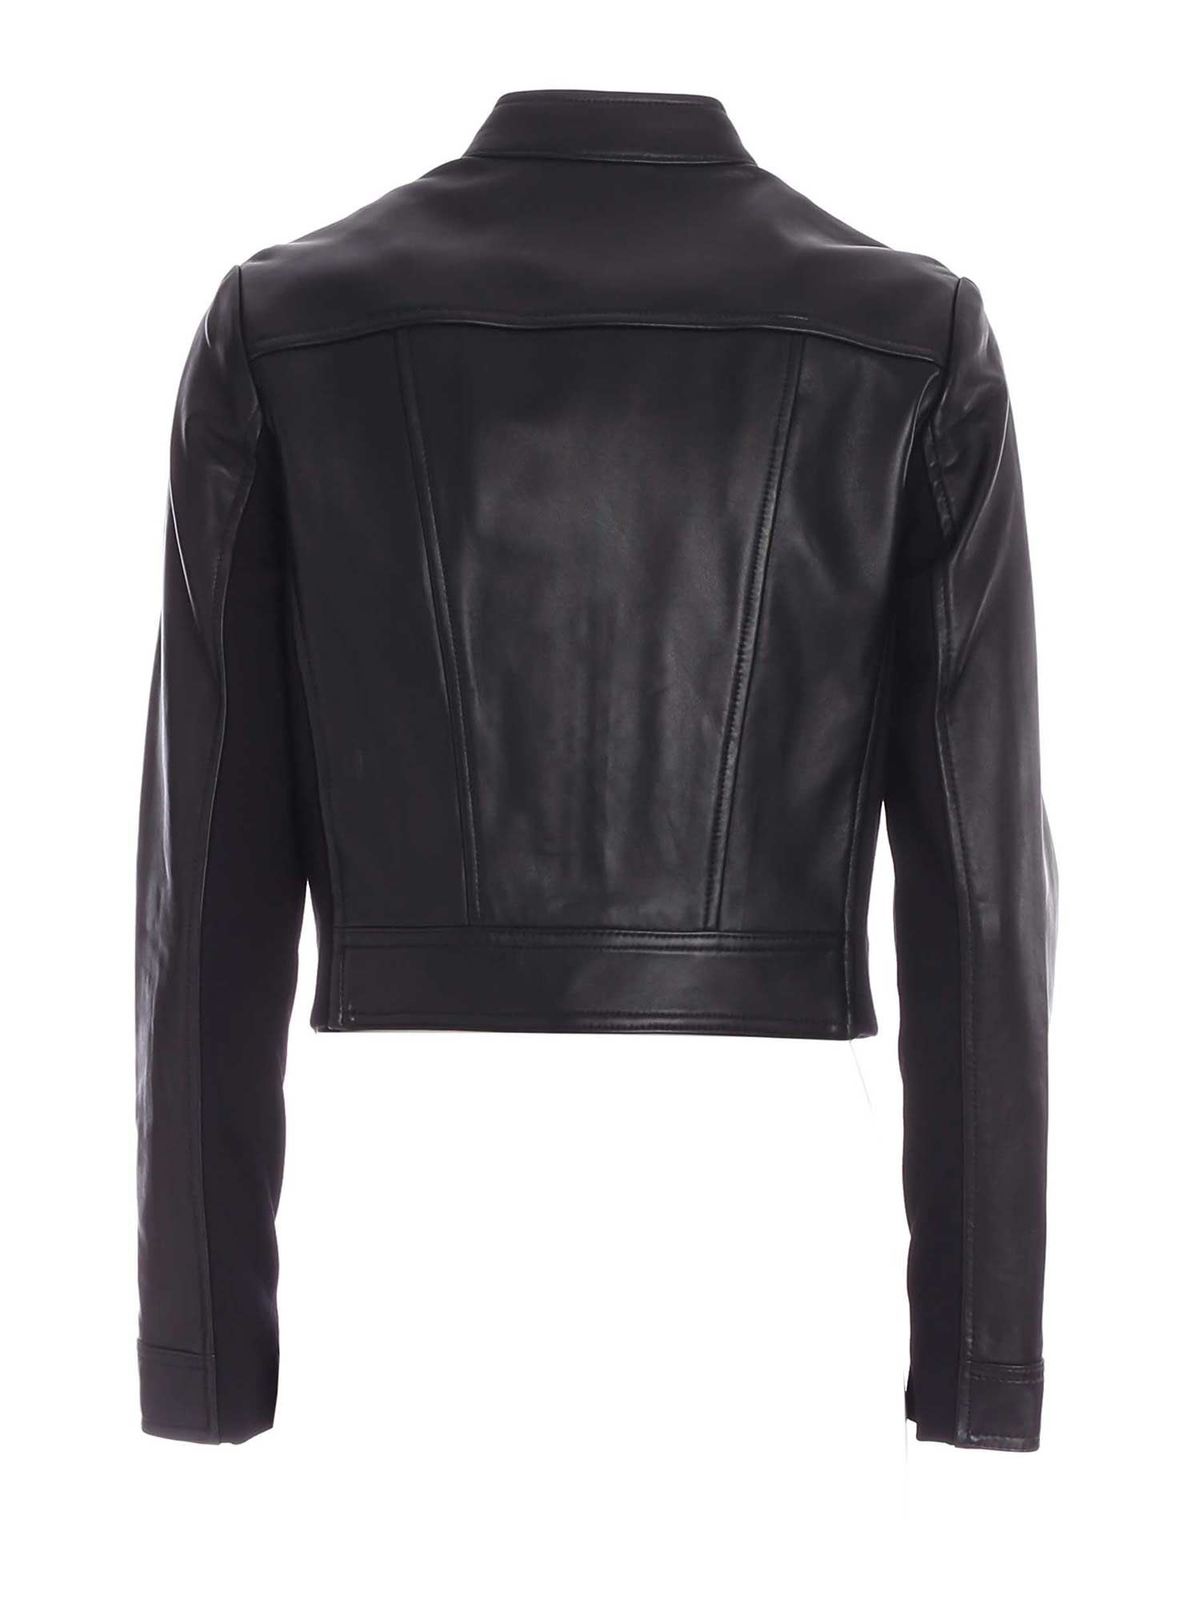 Leather jacket Michael Kors - Leather jacket in black - MB92J0B8RK001